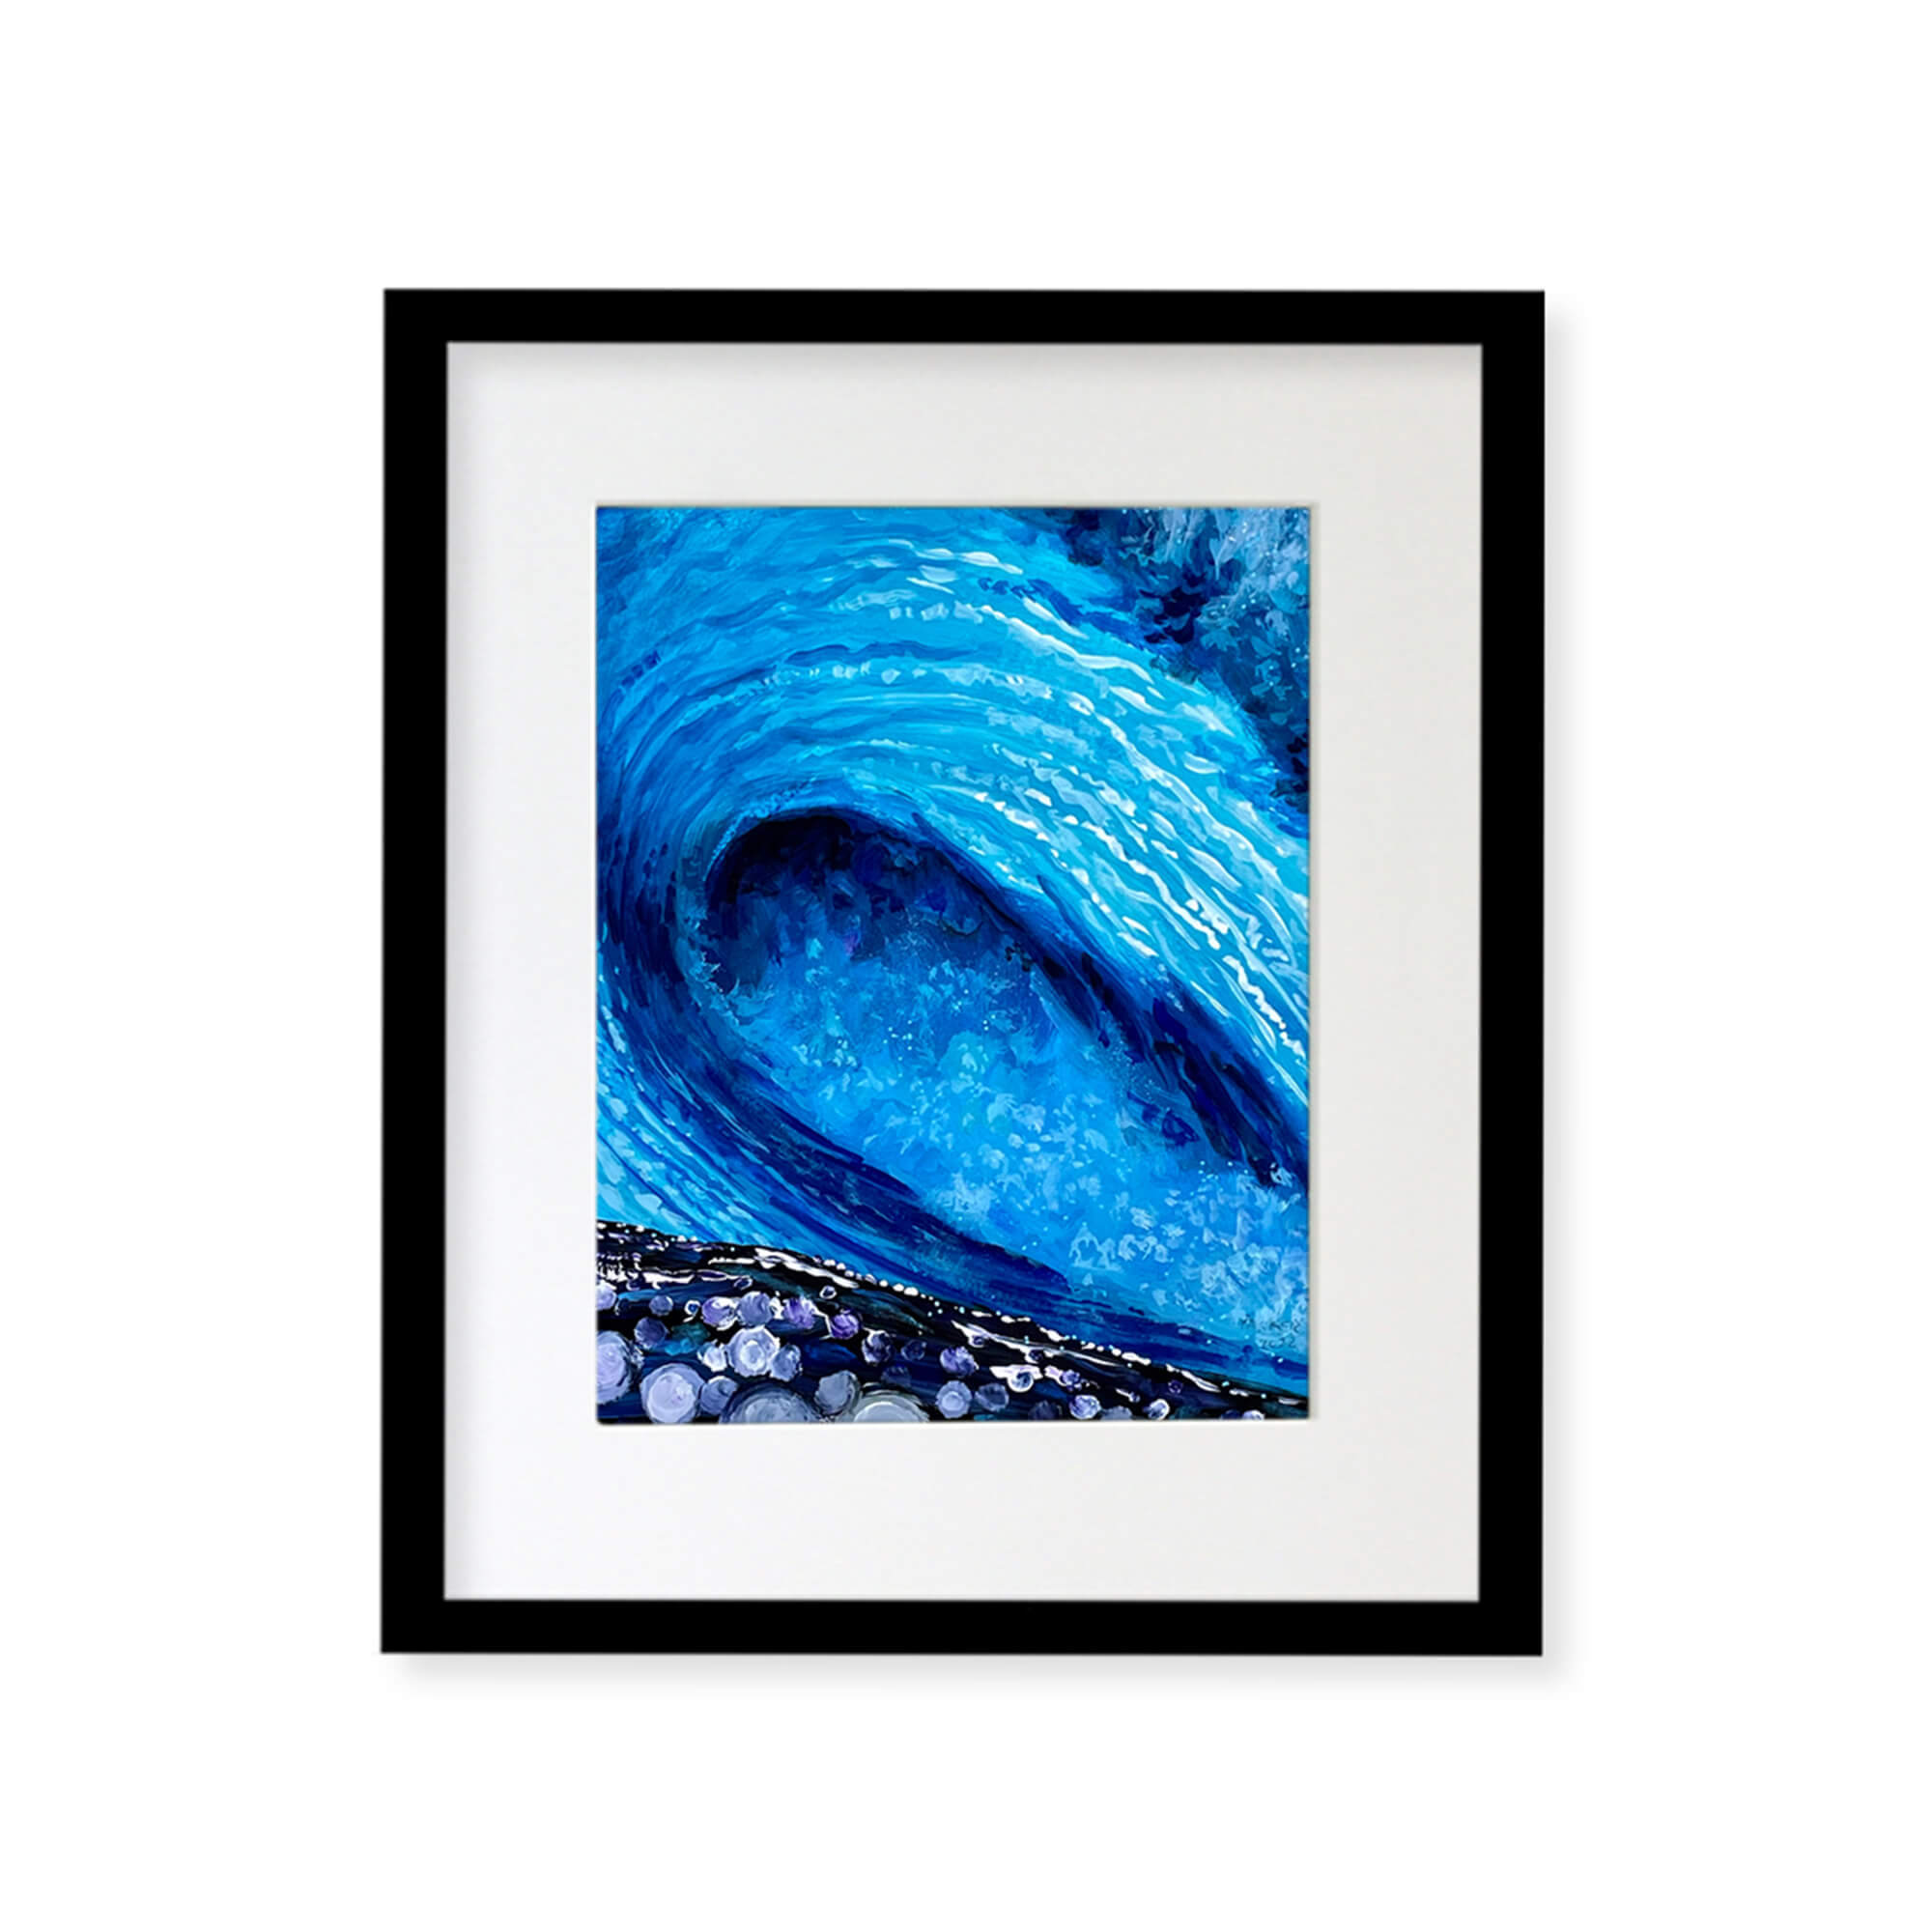 Wave art with gradient blue hue by Wave artist Patrick Parker